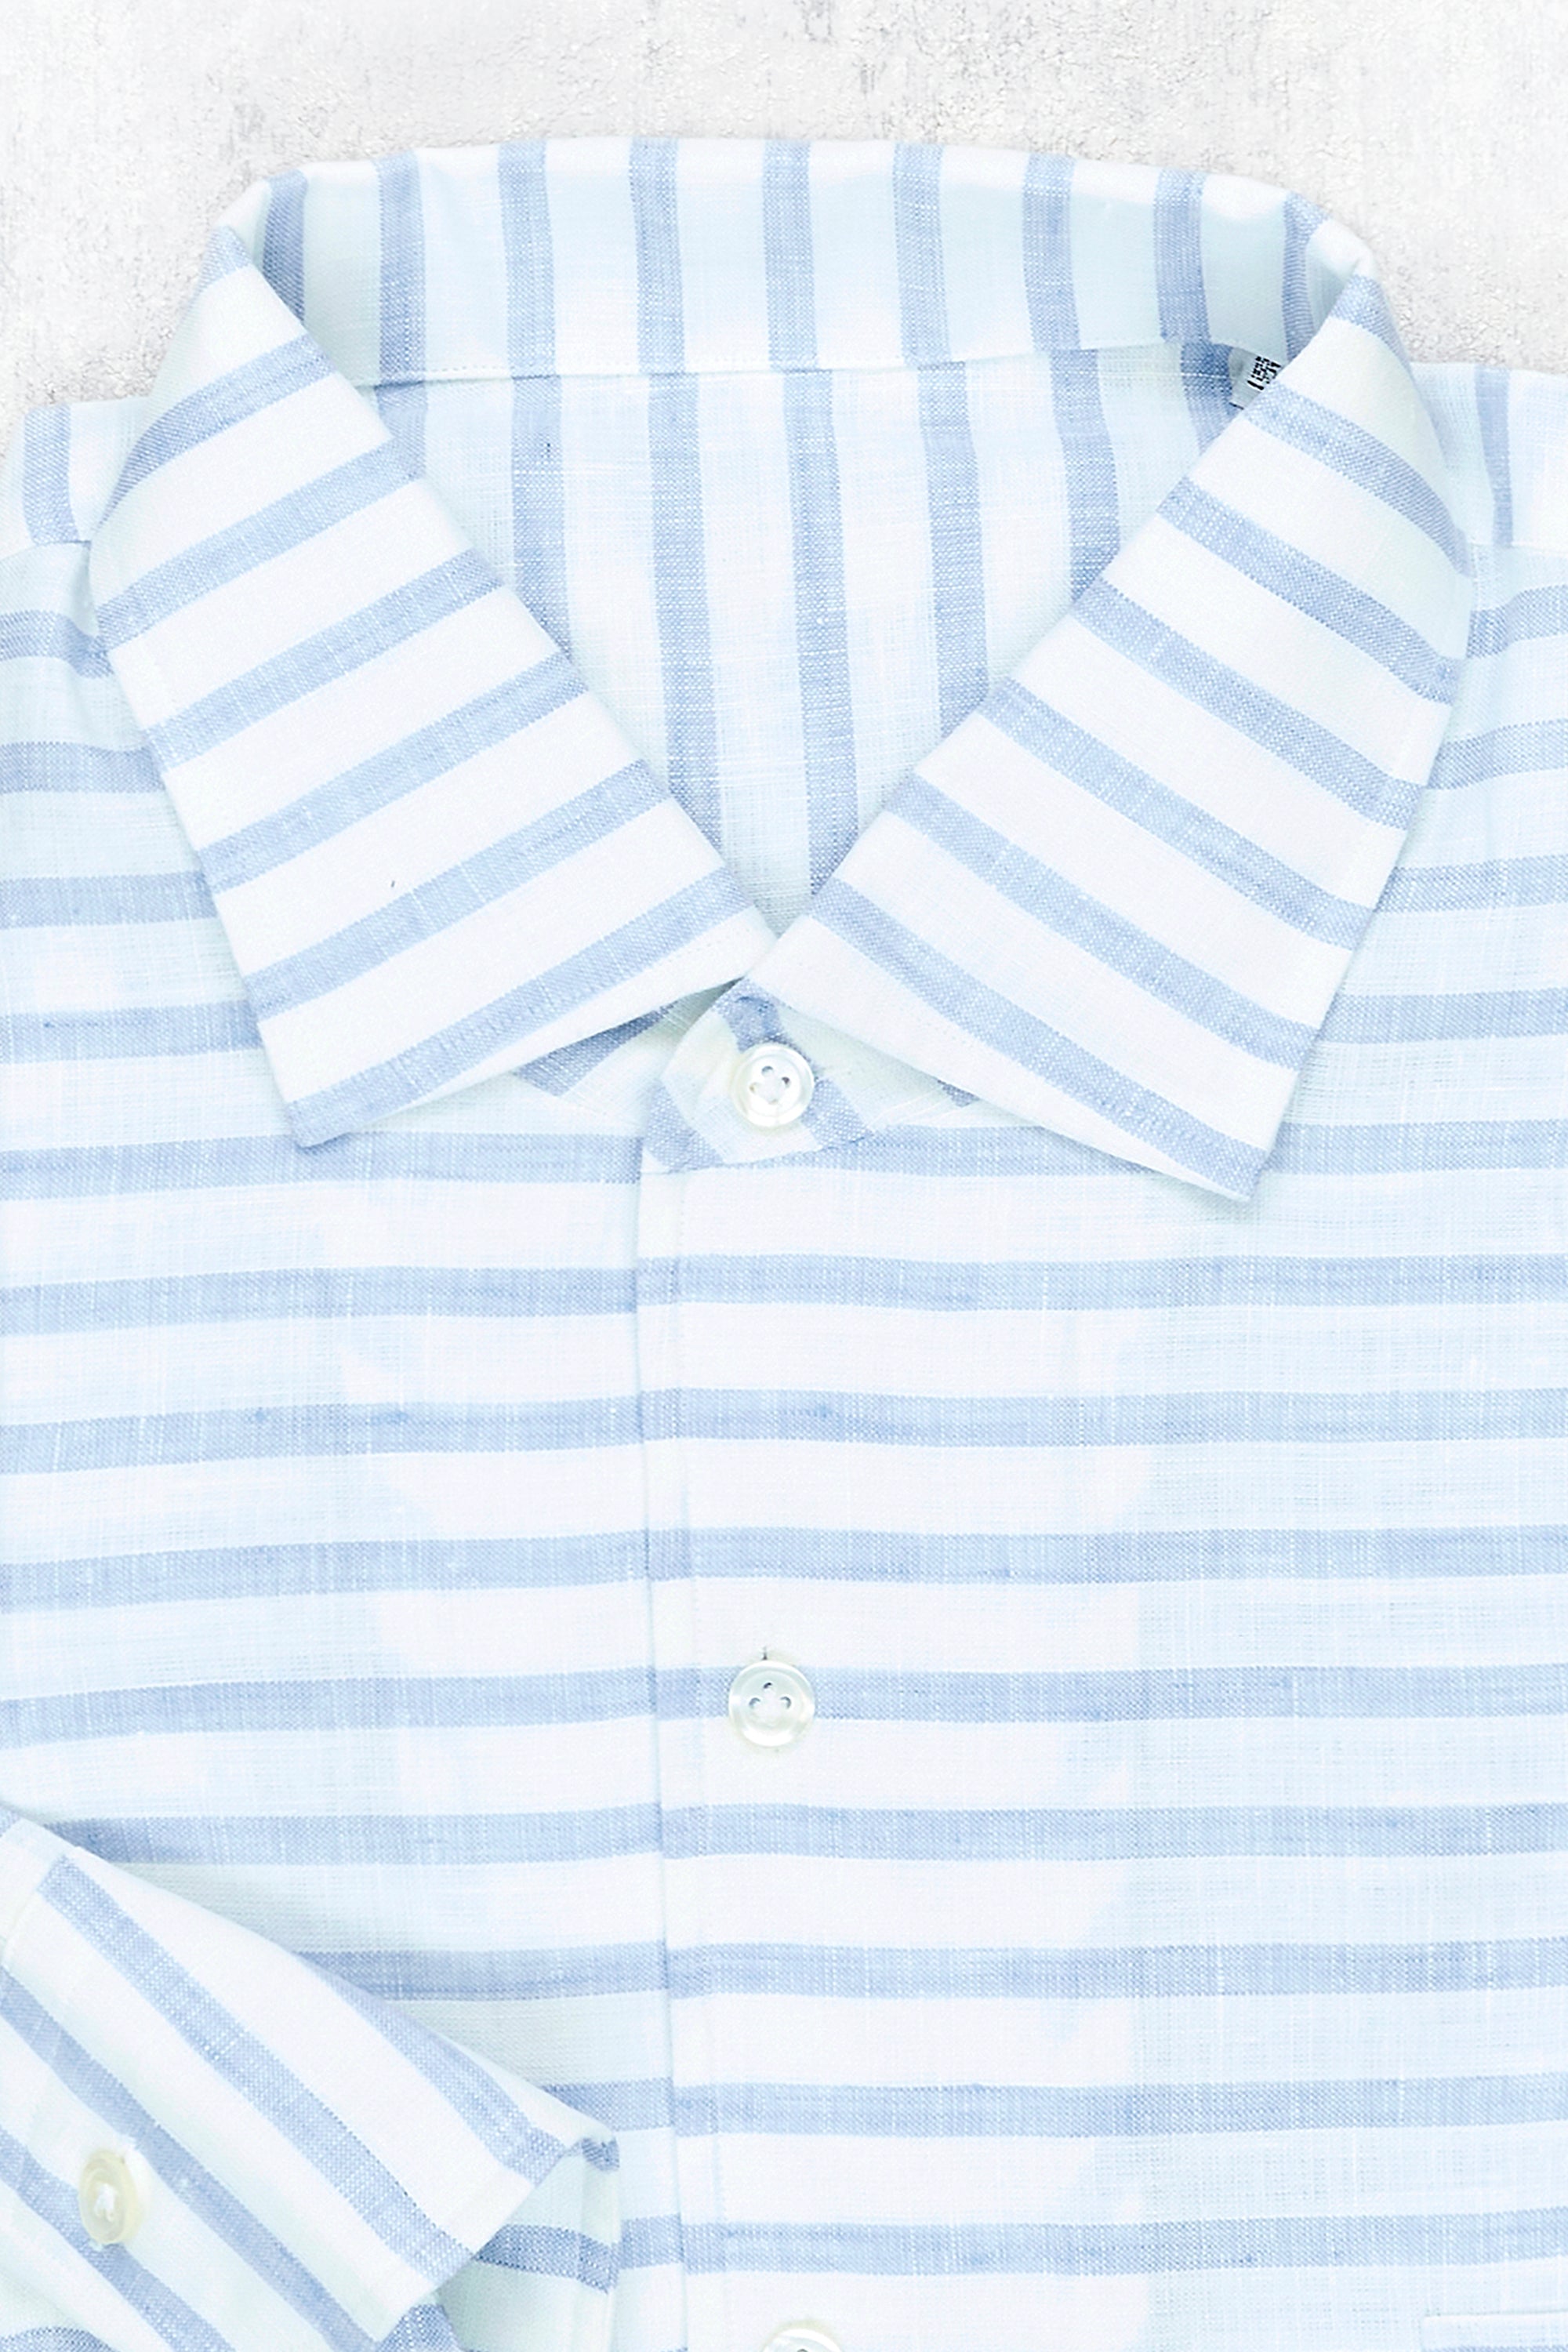 Patrick Johnson Blue and White Horizontal Stripe Linen Portsea Collar Shirt